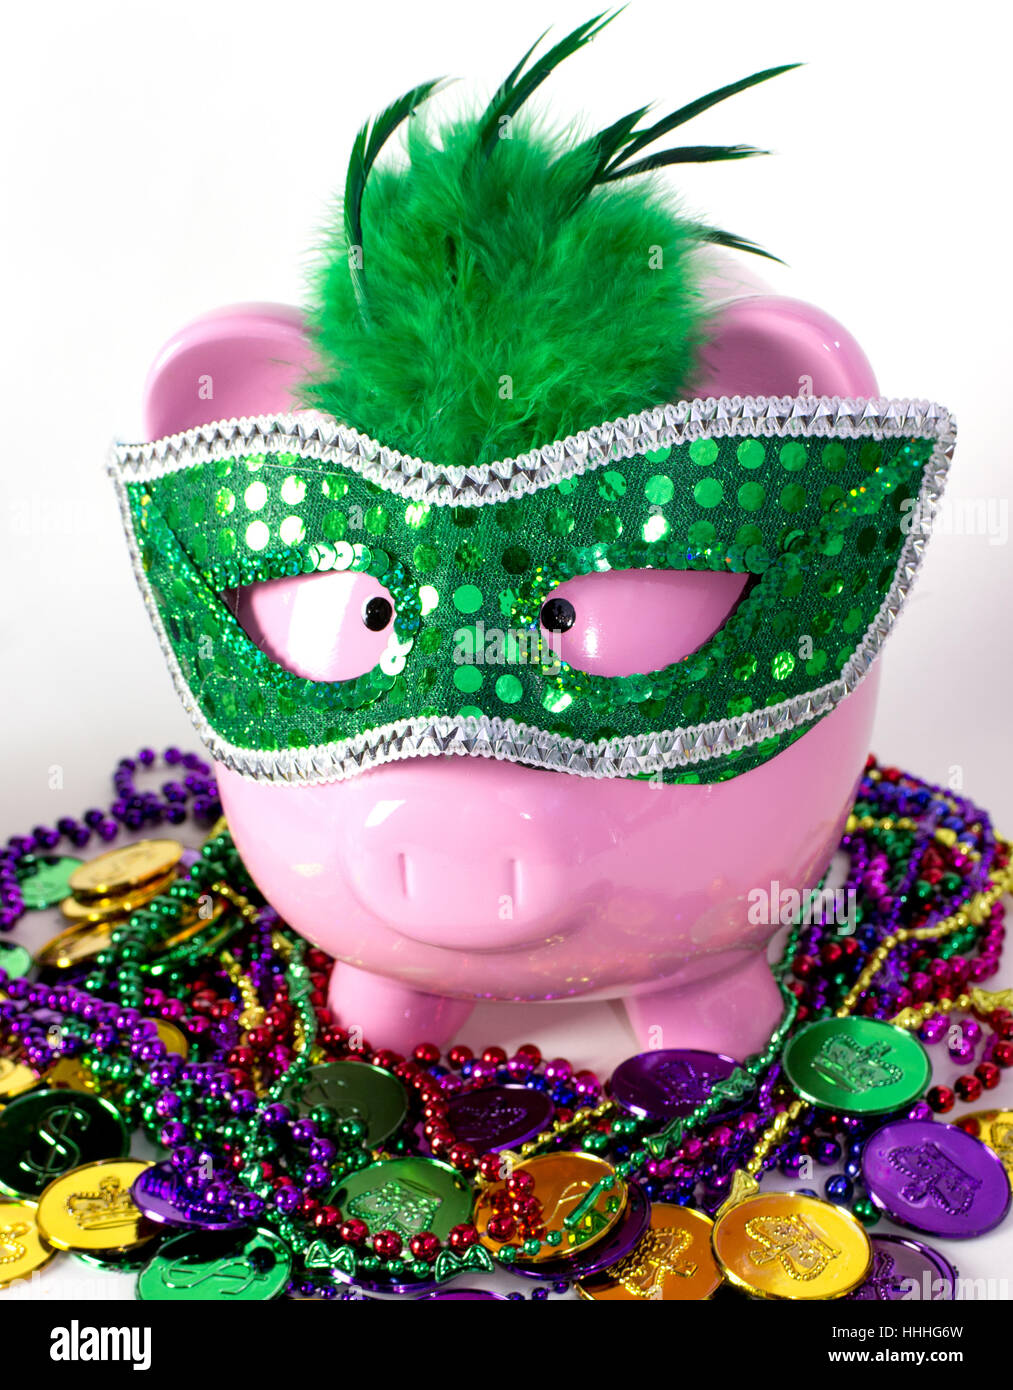 dollar, dollars, green, celebrate, reveling, revels, celebrates, purple, coins, Stock Photo